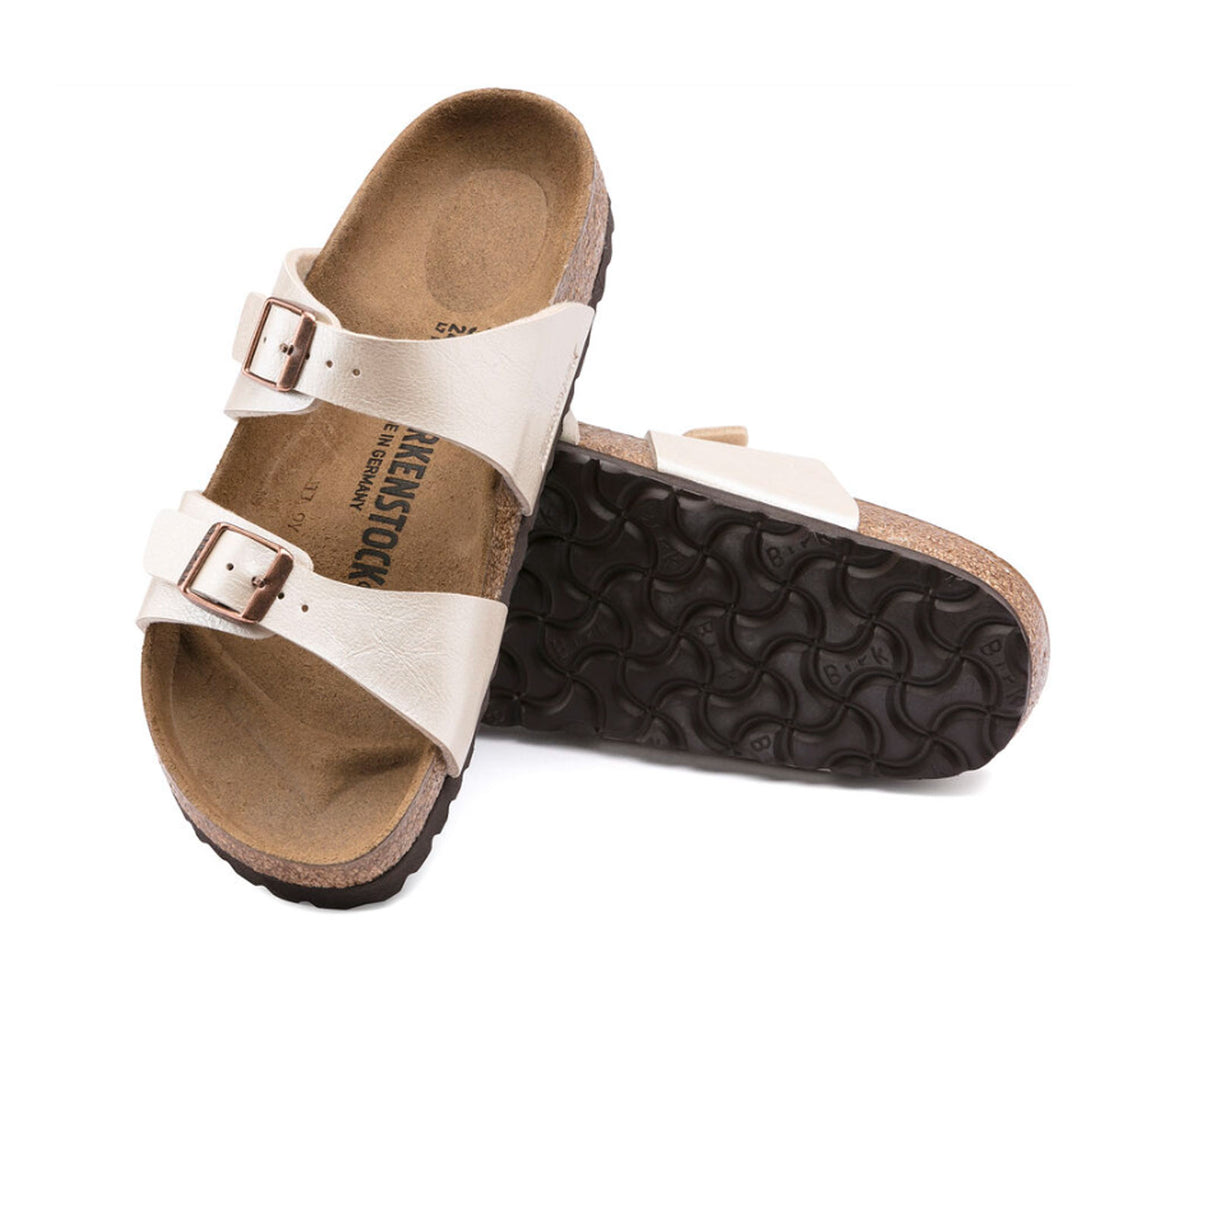 Birkenstock Sydney Slide Sandal (Women) - Graceful Pearl White Sandals - Slide - The Heel Shoe Fitters